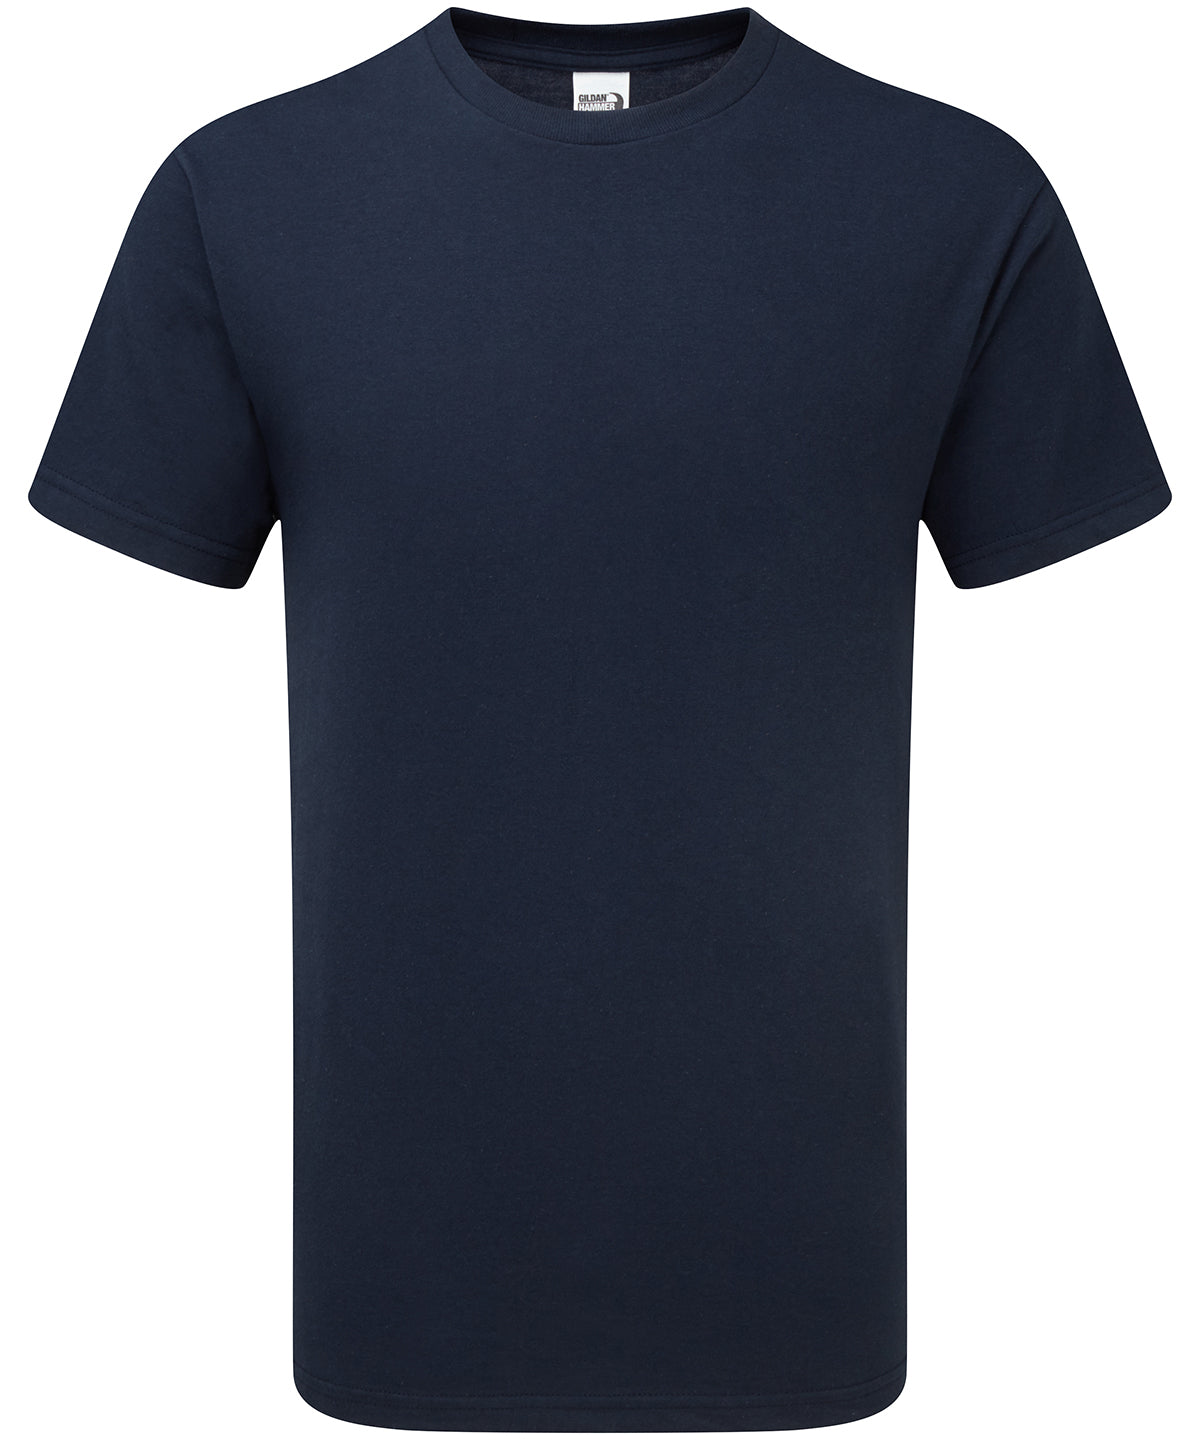 Gildan Hammer adult t-shirt